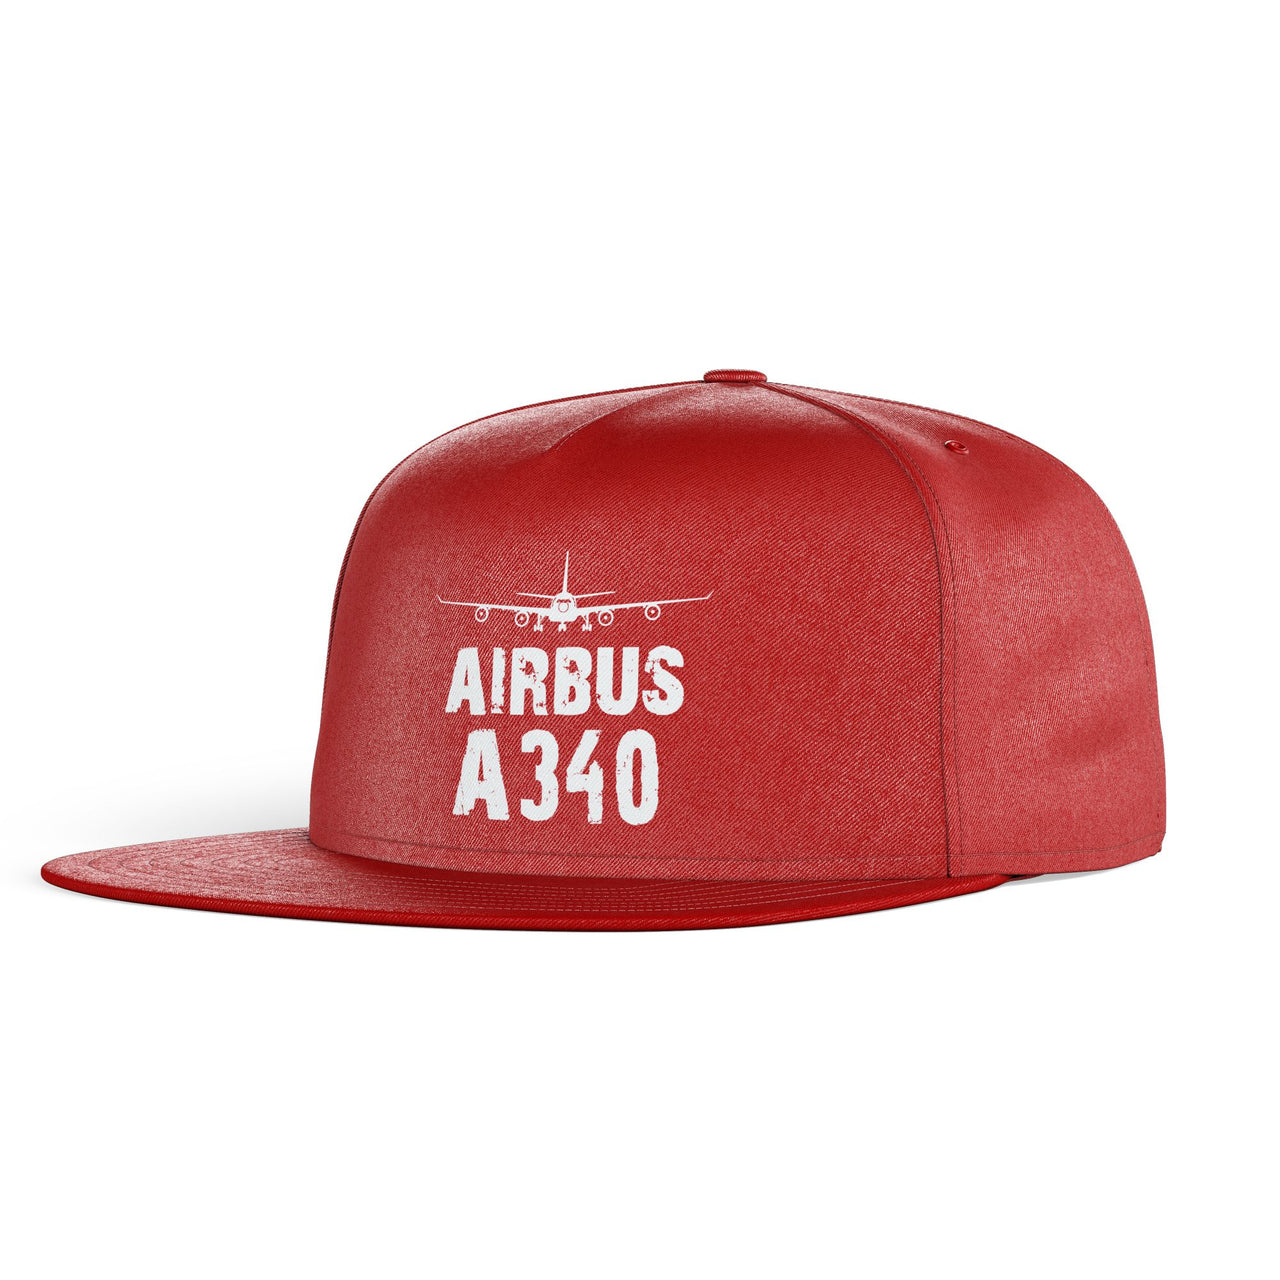 Airbus A340 & Plane Designed Snapback Caps & Hats